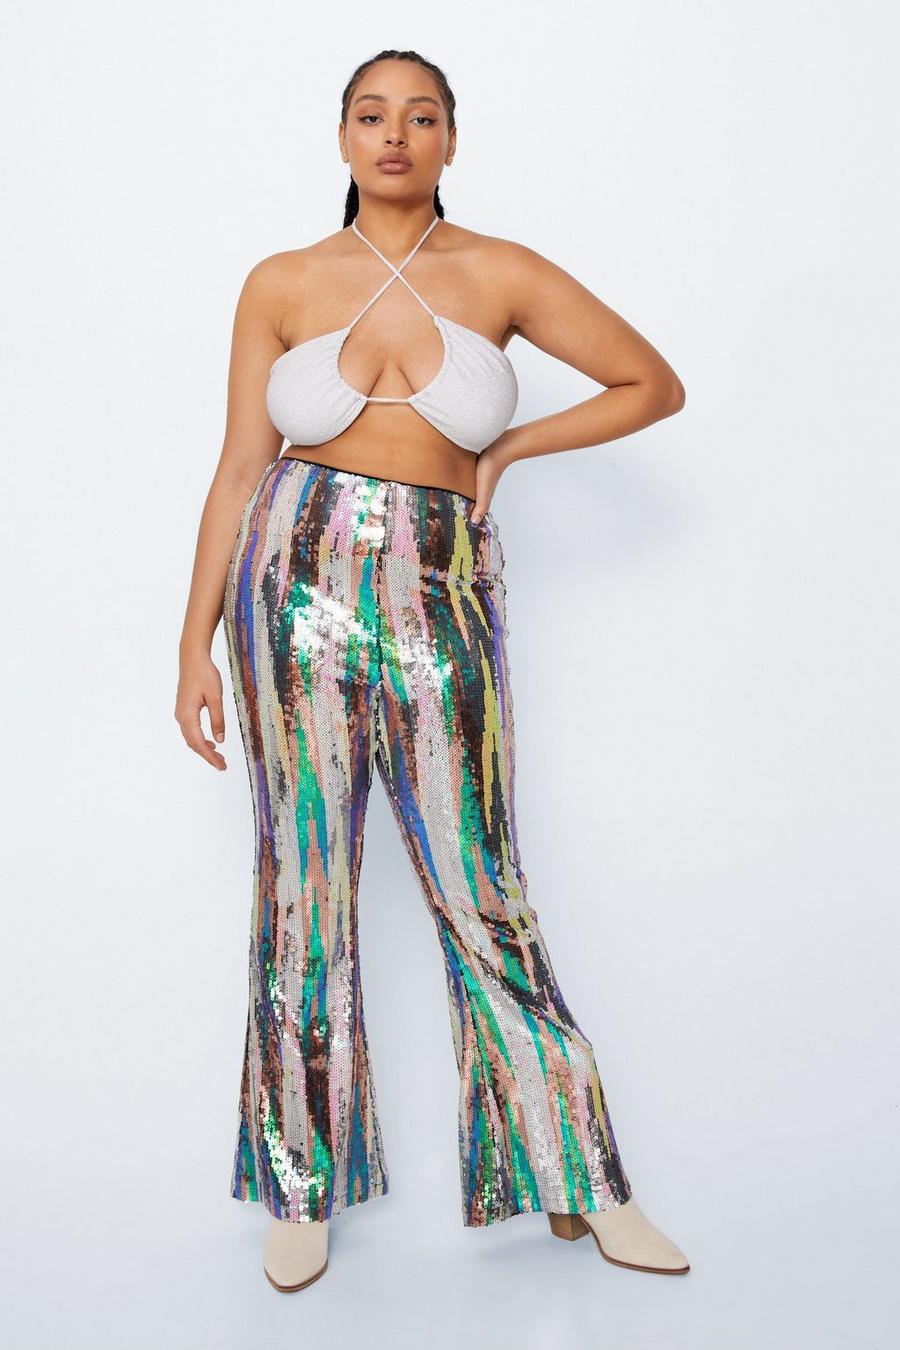 Uillui Women Fashion Glitter Sequin Pants High Waist Slim Fit